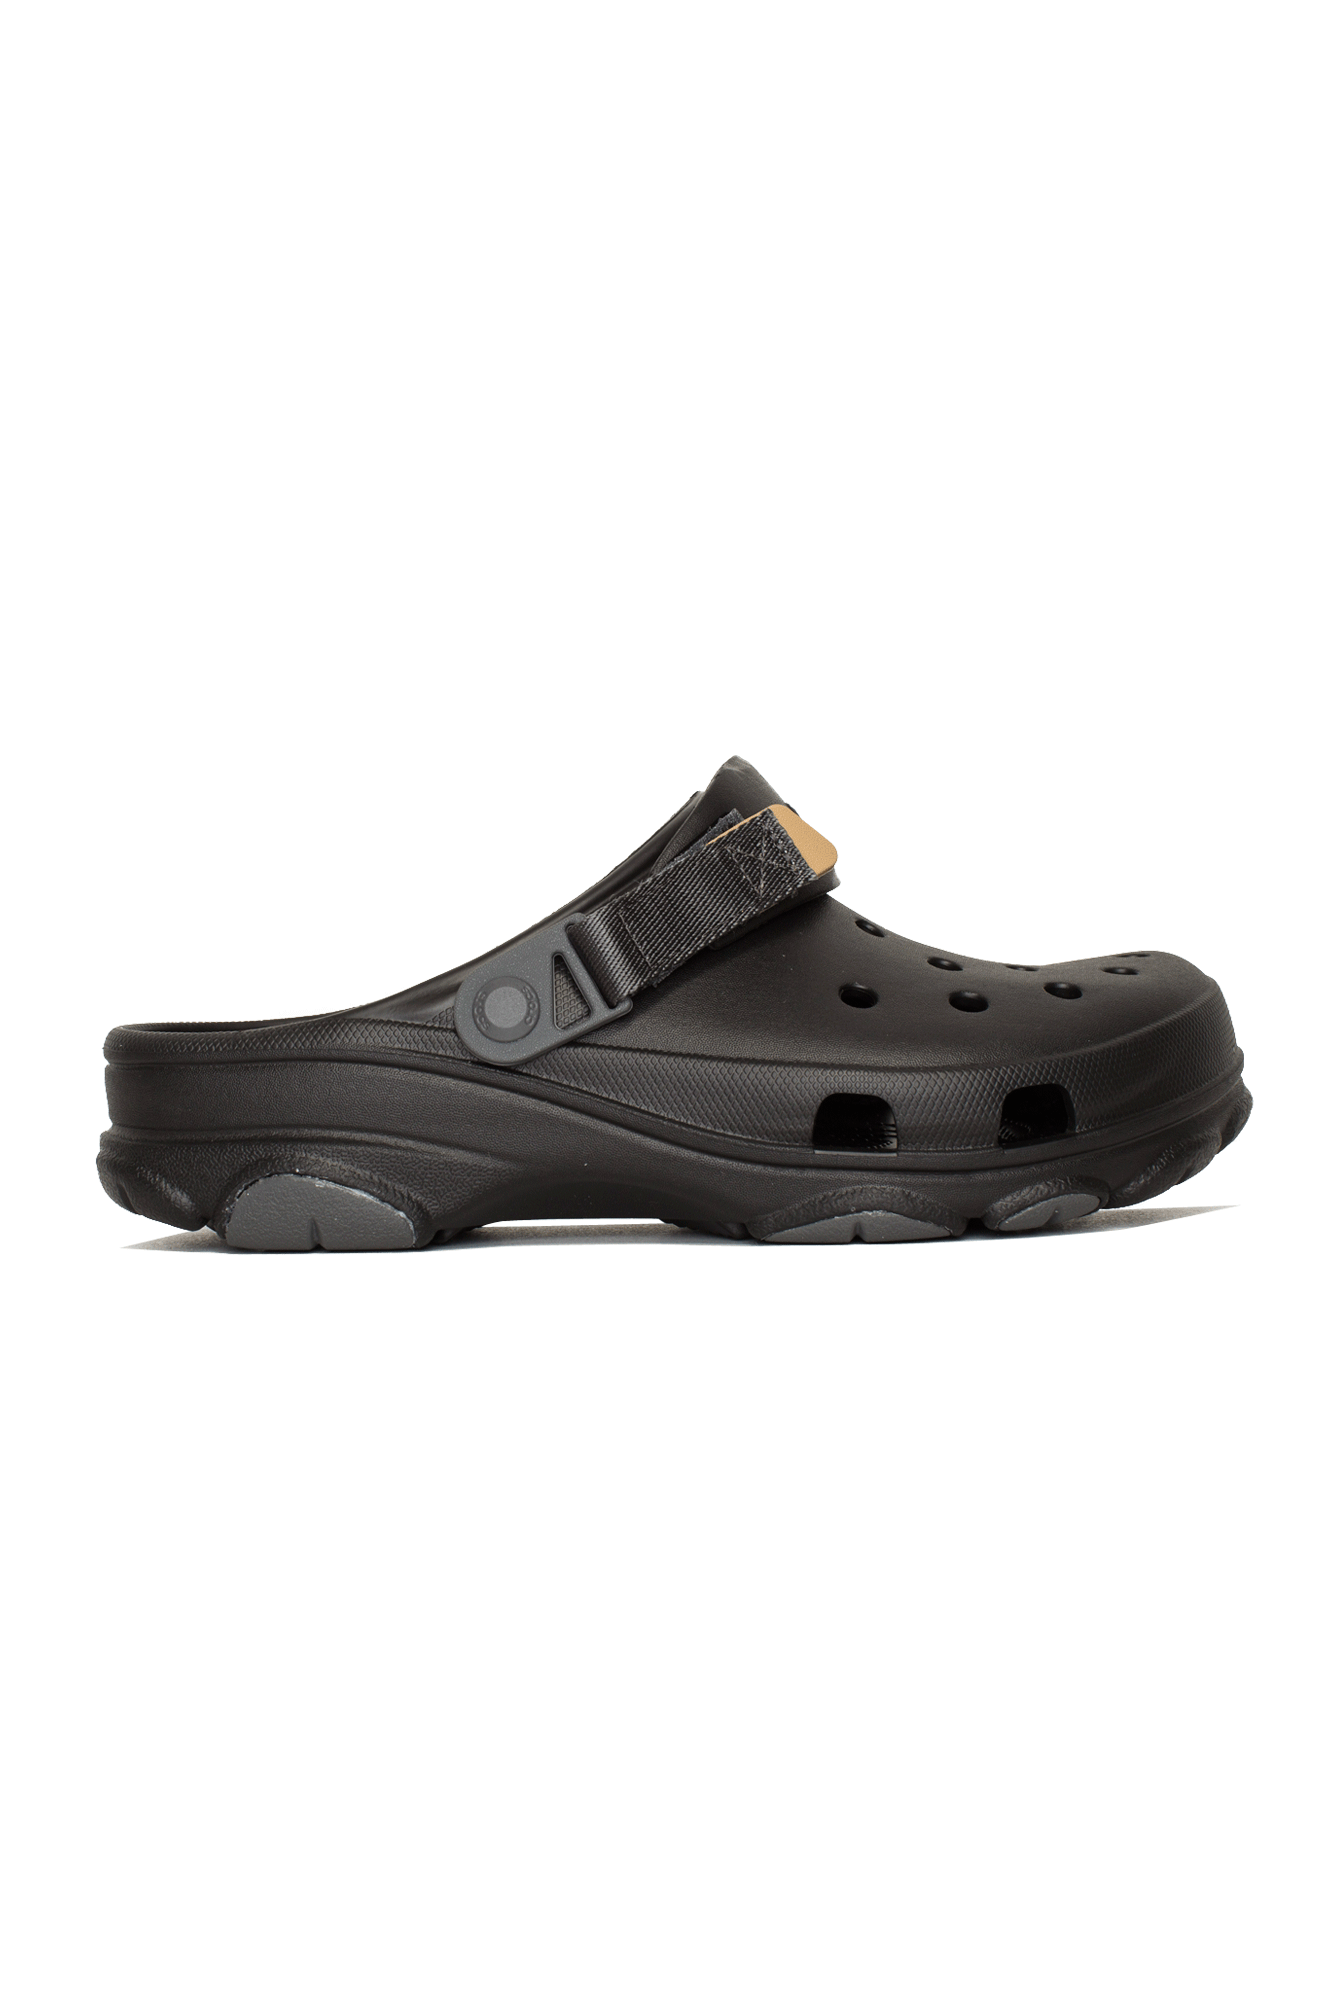 Crocs Sandals & Slides All Terrain Glog M Black CR.206340#000#BLK#7 - One Block Down